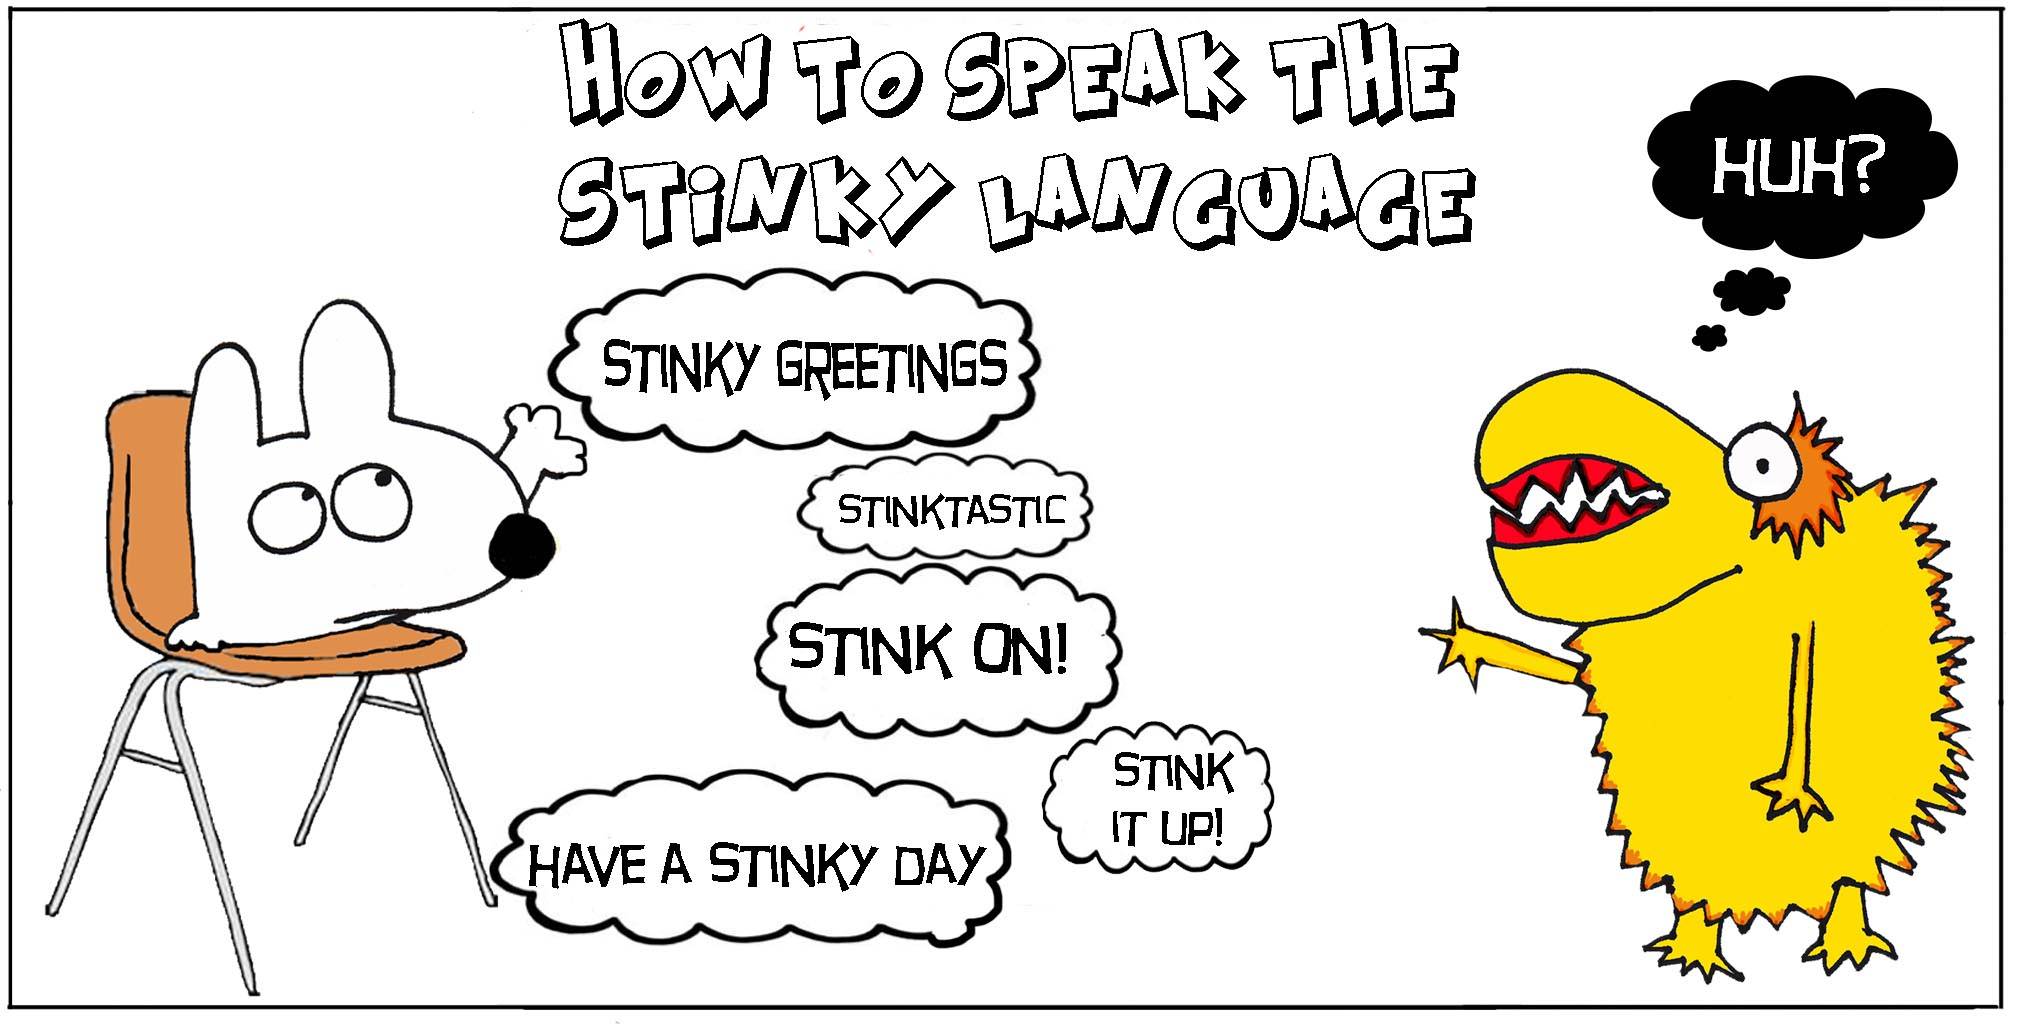 stinky dog teaches how to speak the stinky language to neighborhood nipper